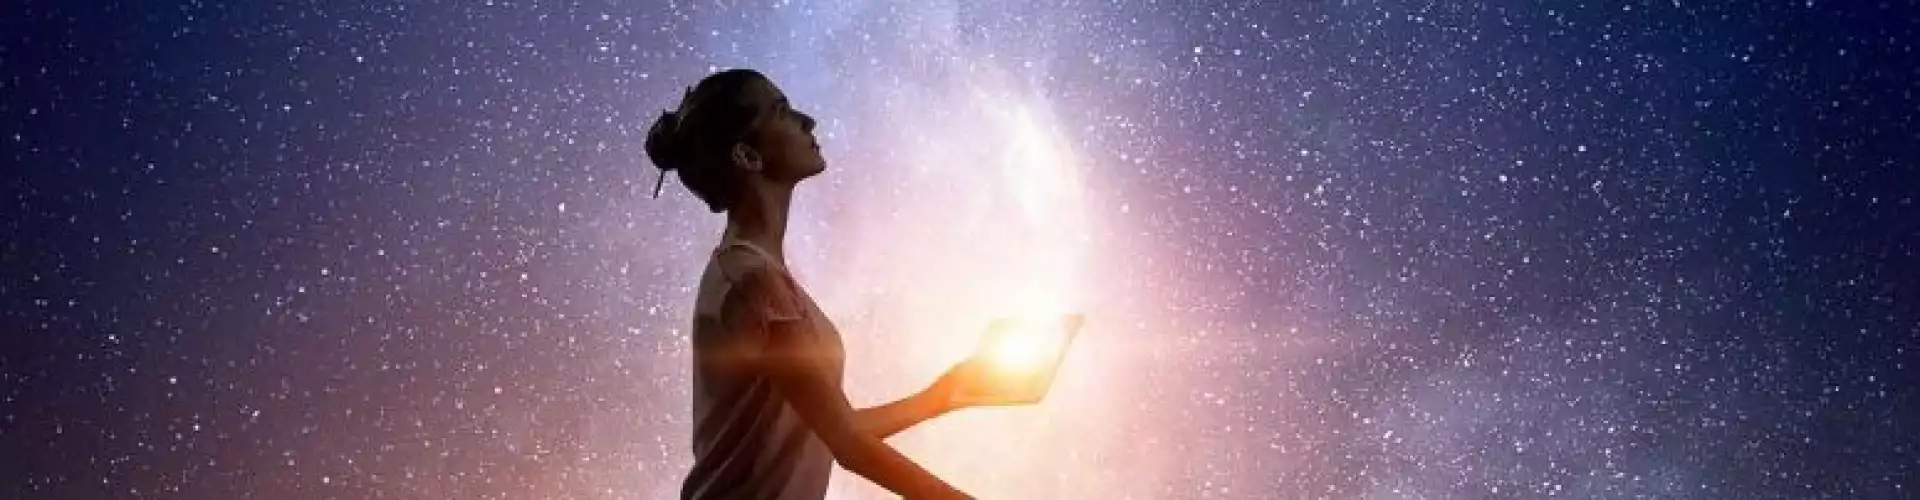 Discover Energy Healing. Raise your Vibration, Raise Your Immunity